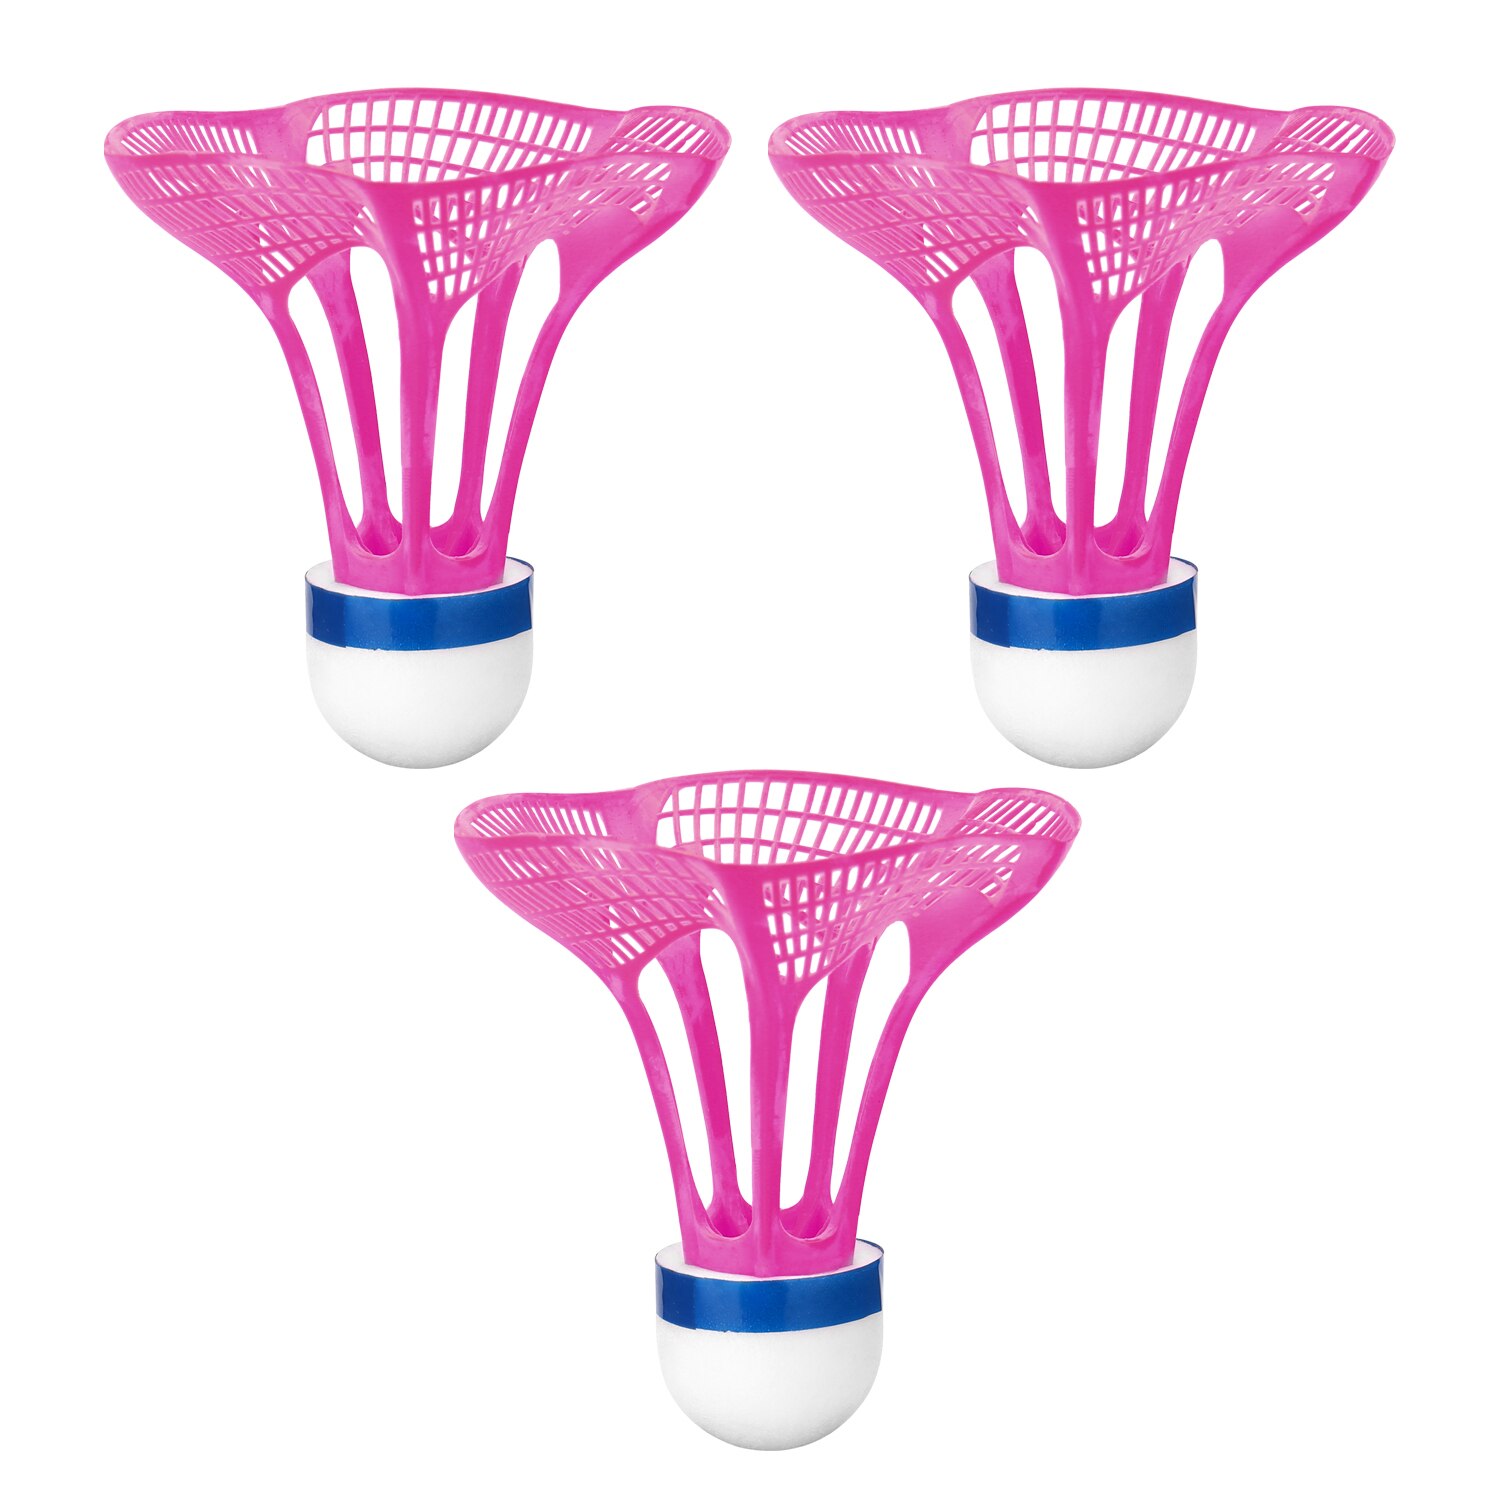 Originale airshuttle udendørs badminton airshuttle plastkugle nylon fjerball kugle stabil modstand 3 stk / pakke: Lavendel